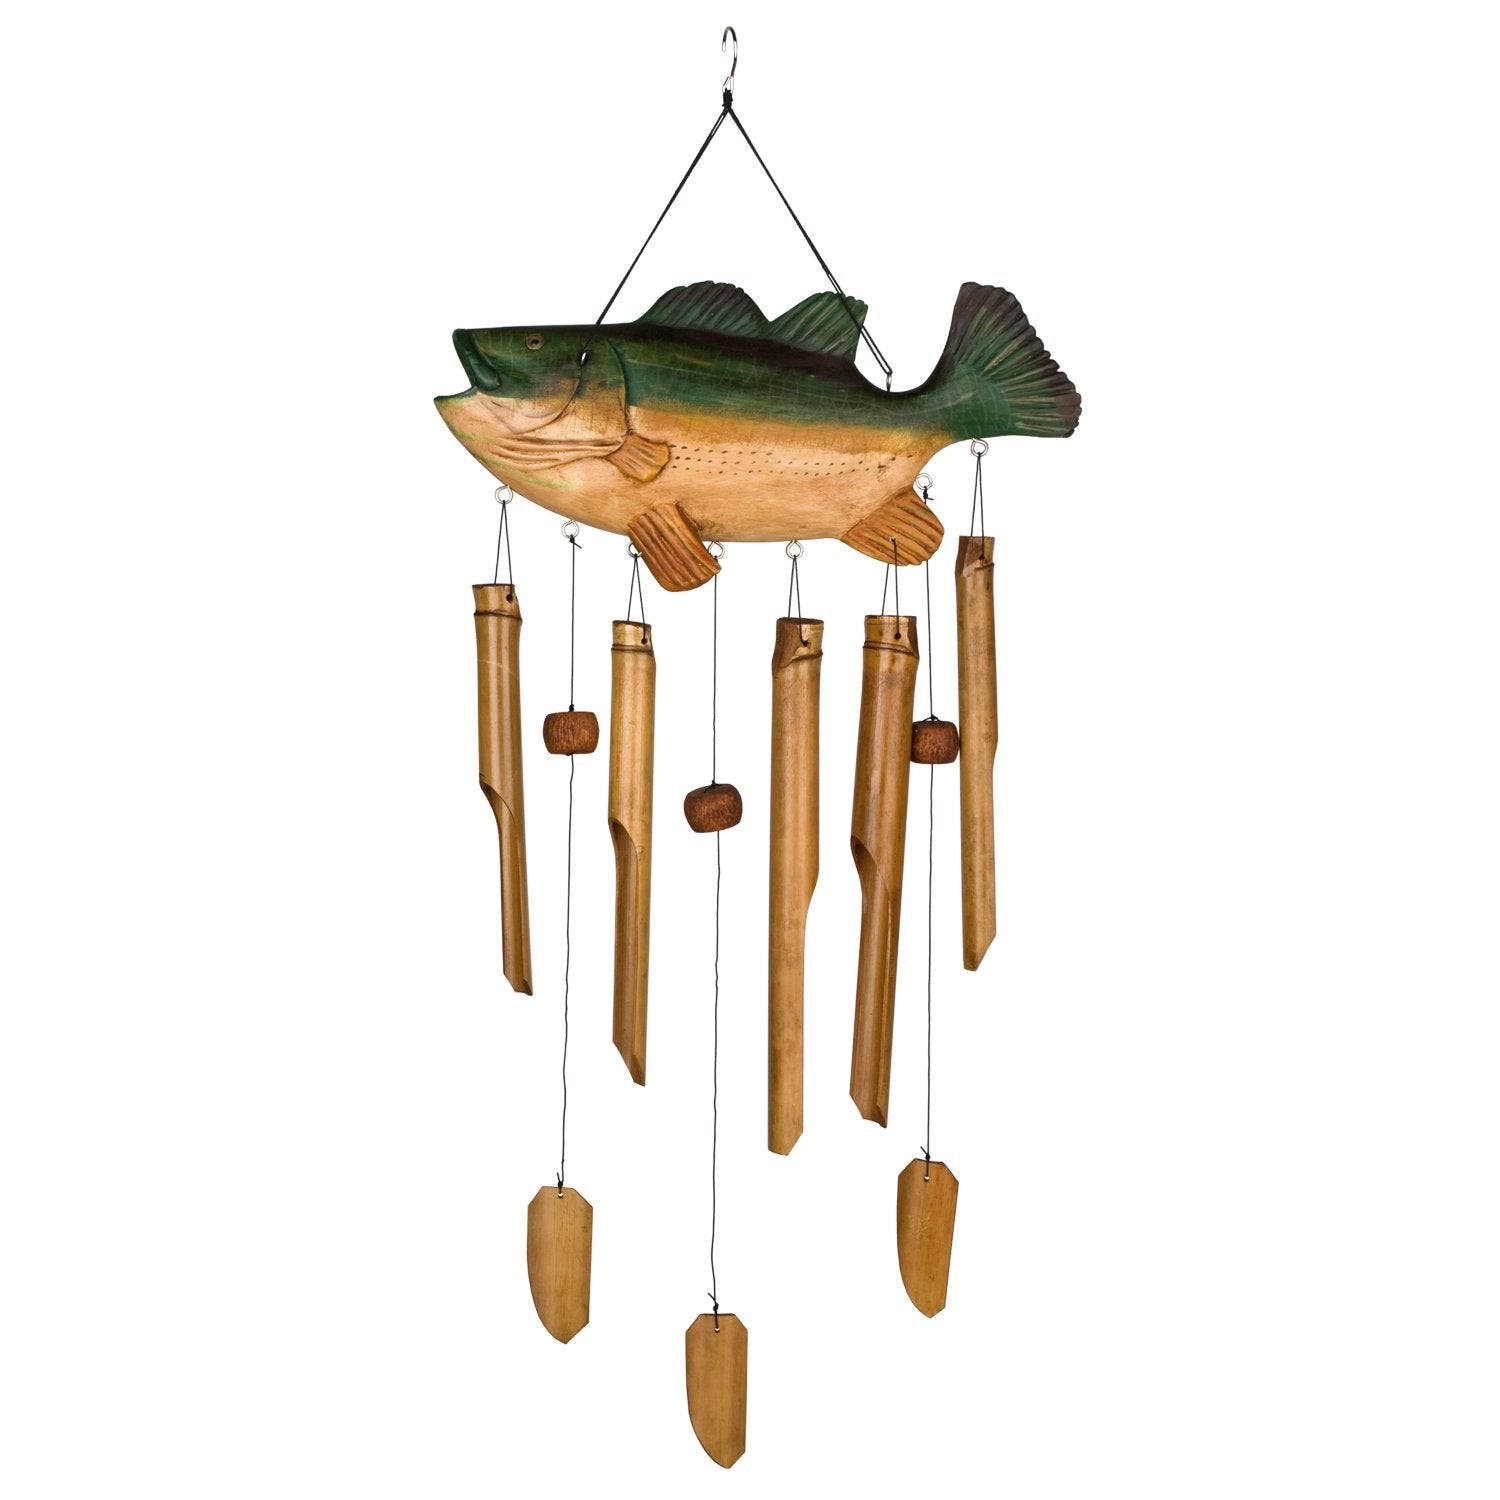 Animal Bamboo Chime - Bass Fish full product image